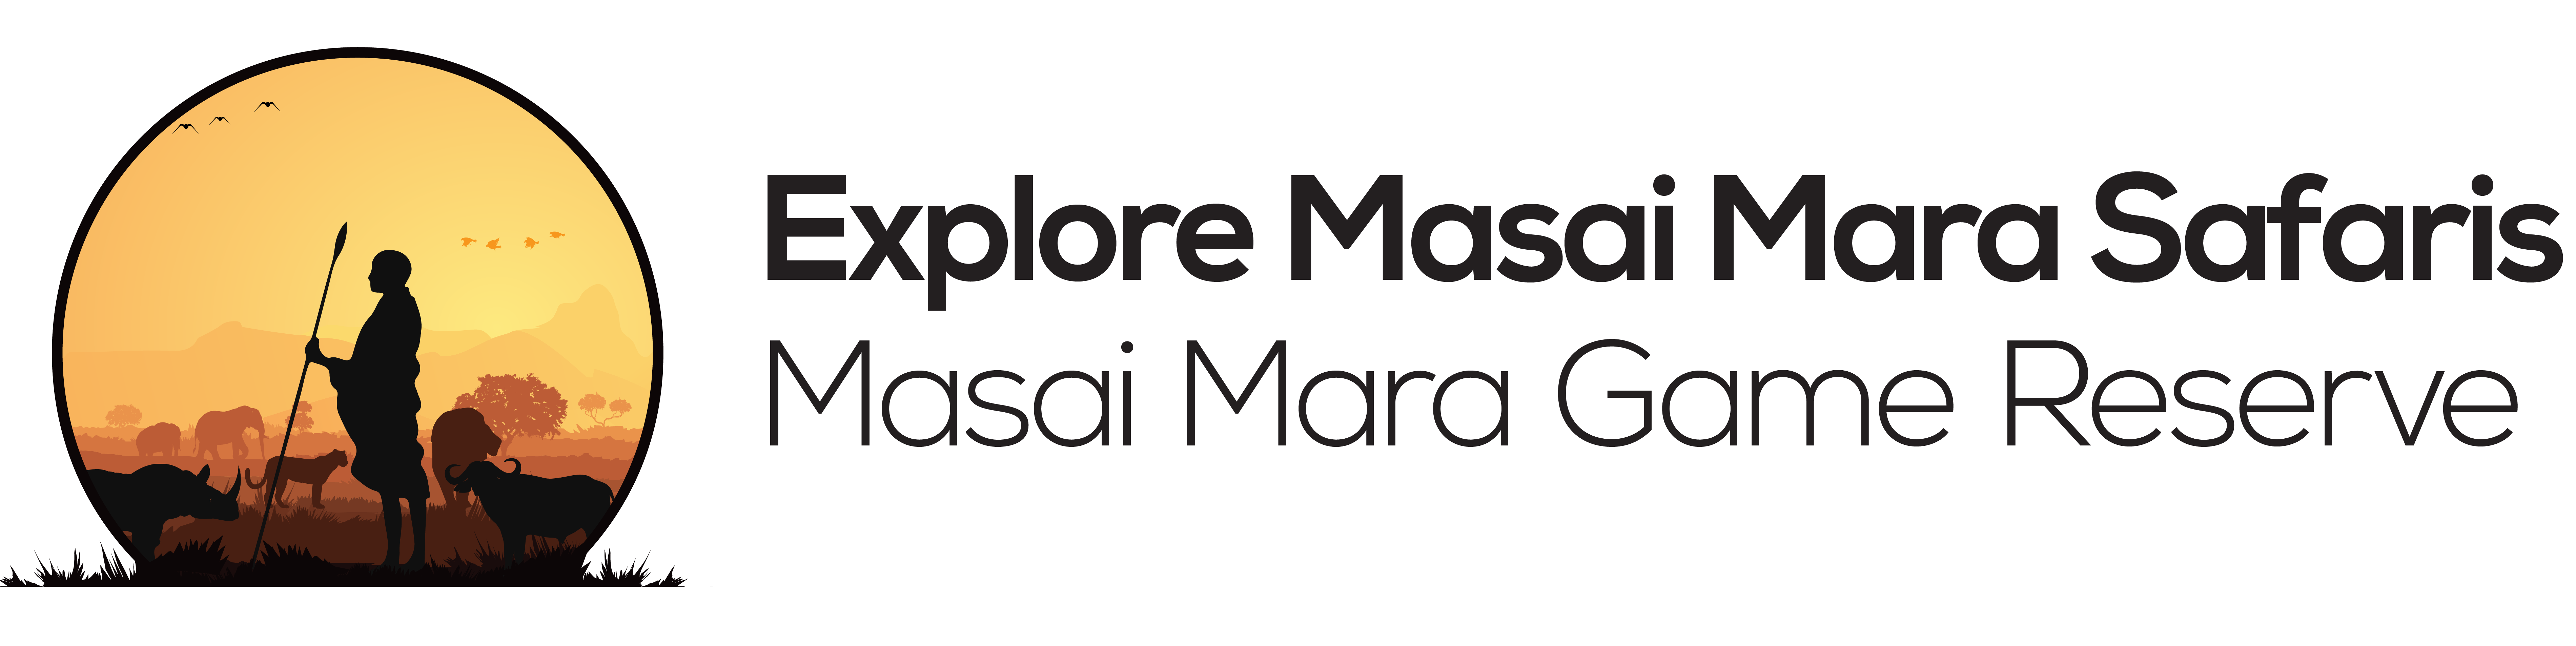 Explore masai mara | Bird of masai mara - birds in masai mara national reserve